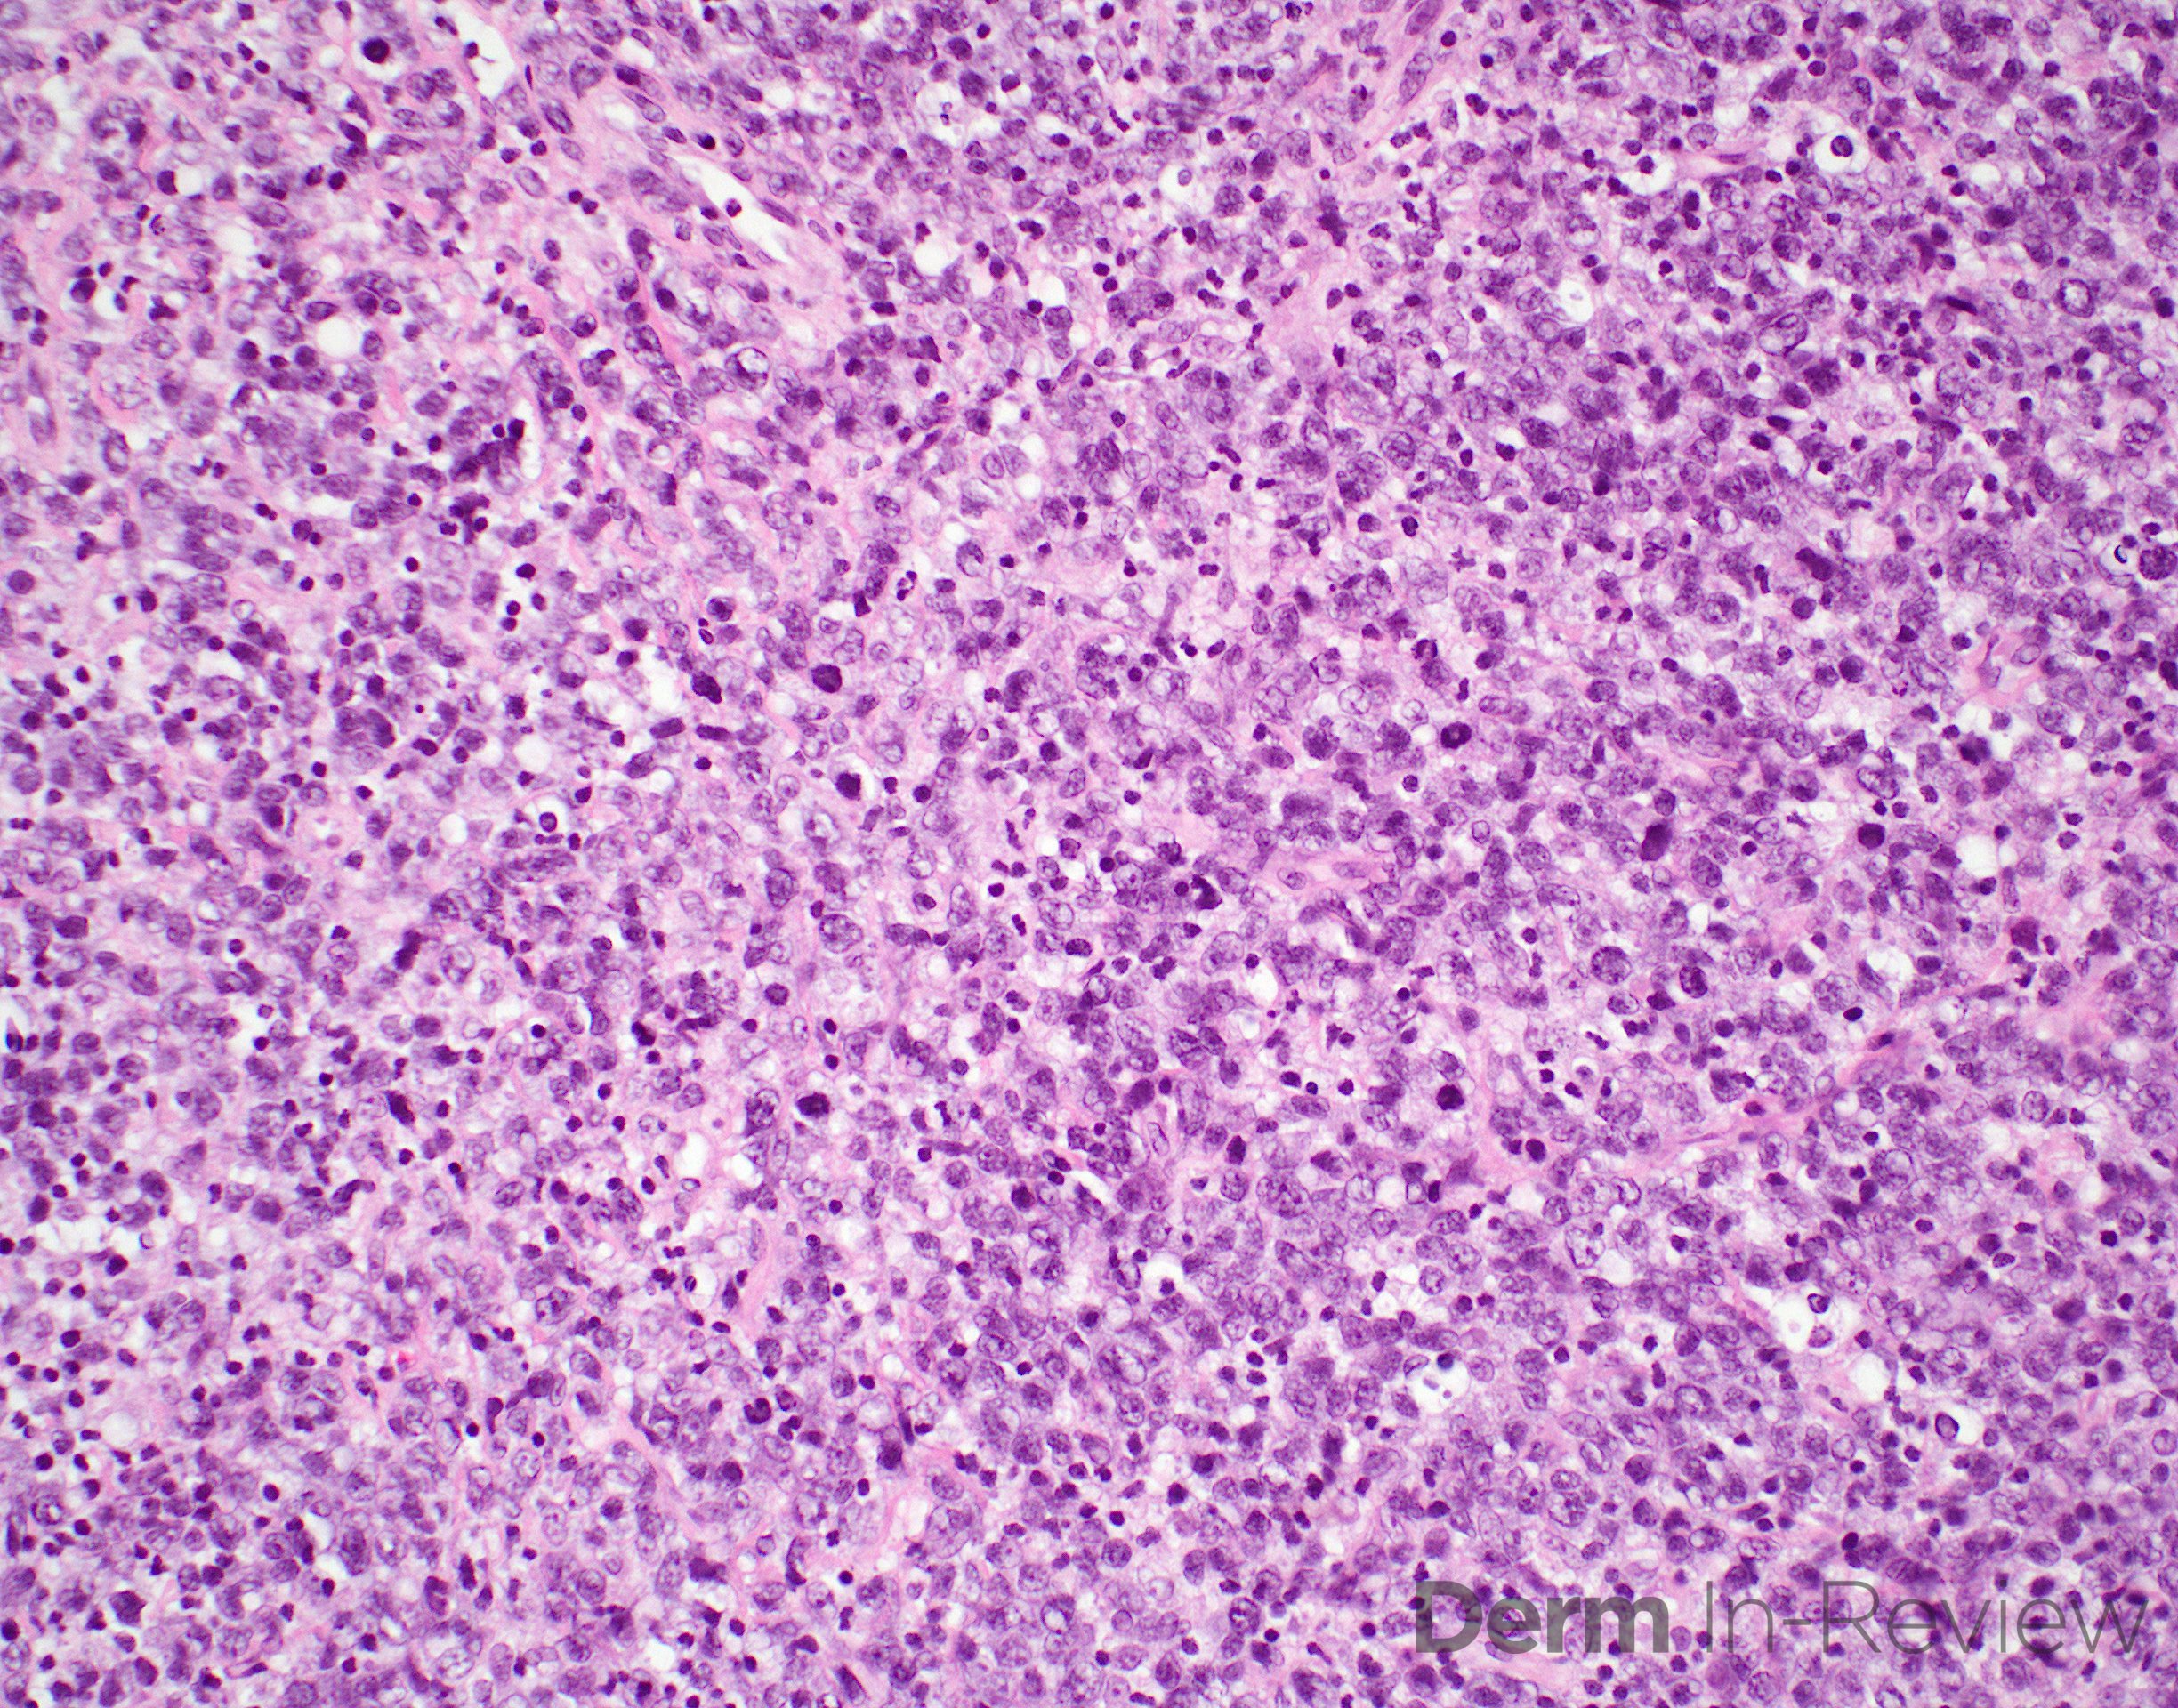 18.11B Diffuse large B-cell lymphoma, high power